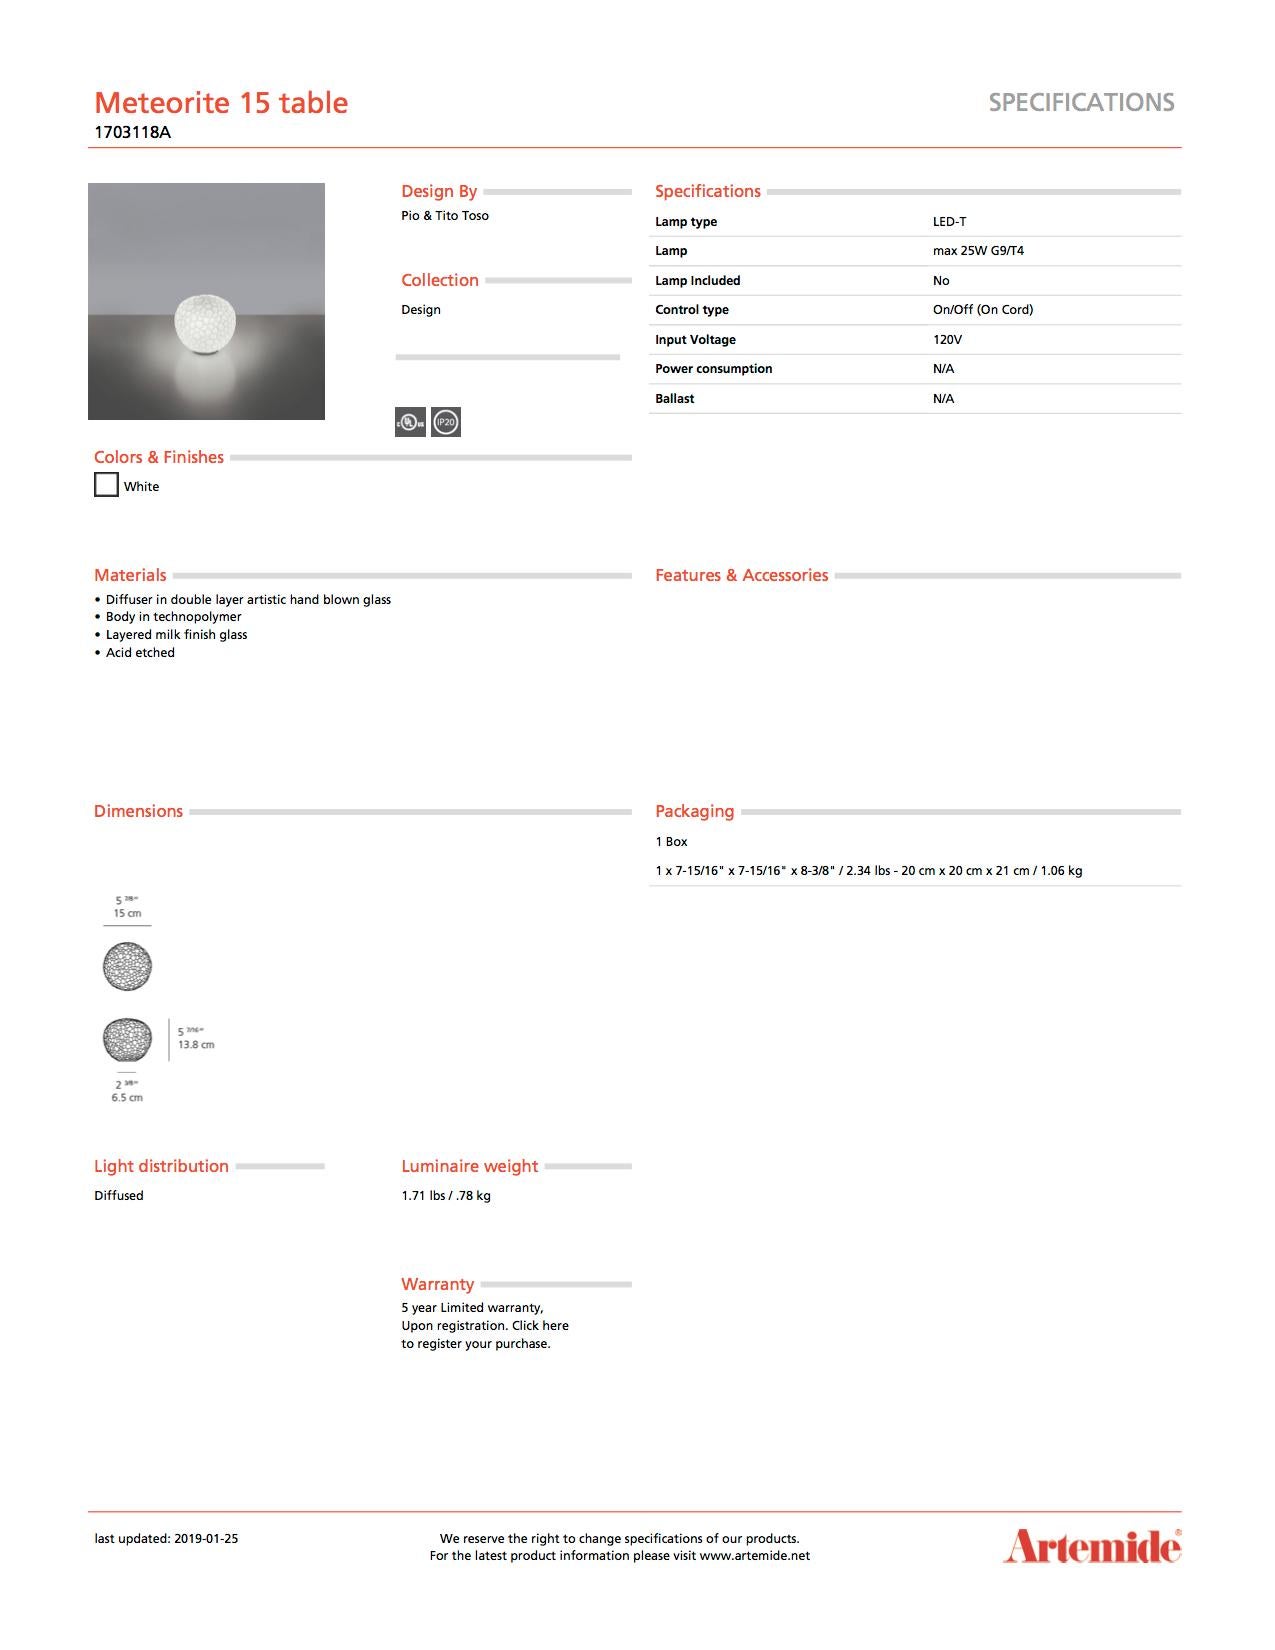 Italian Artemide Meteorite 15 Table Lamp in White For Sale